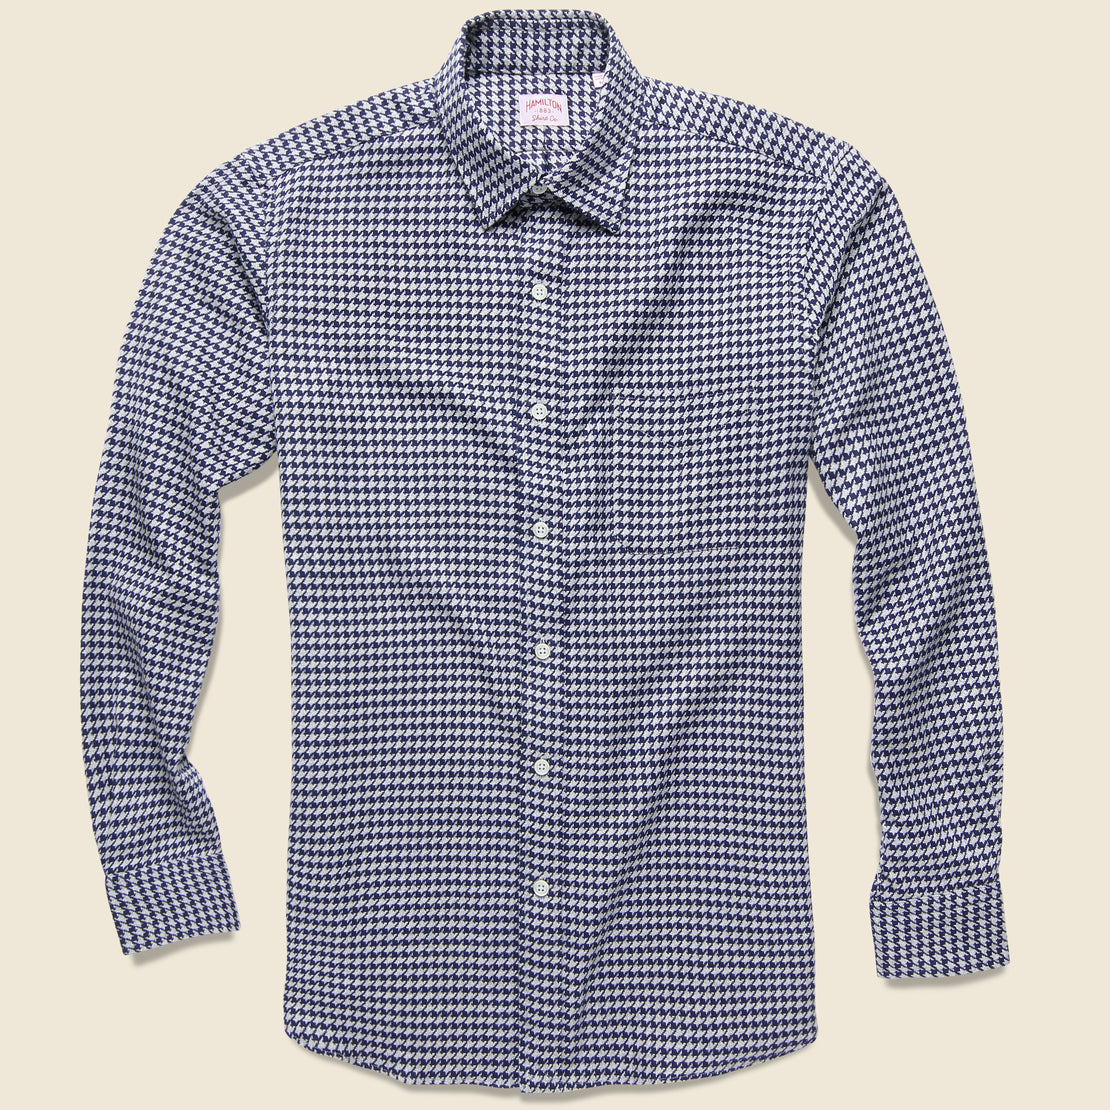 Hamilton Shirt Co. Houndstooth Shirt - Grey/Navy